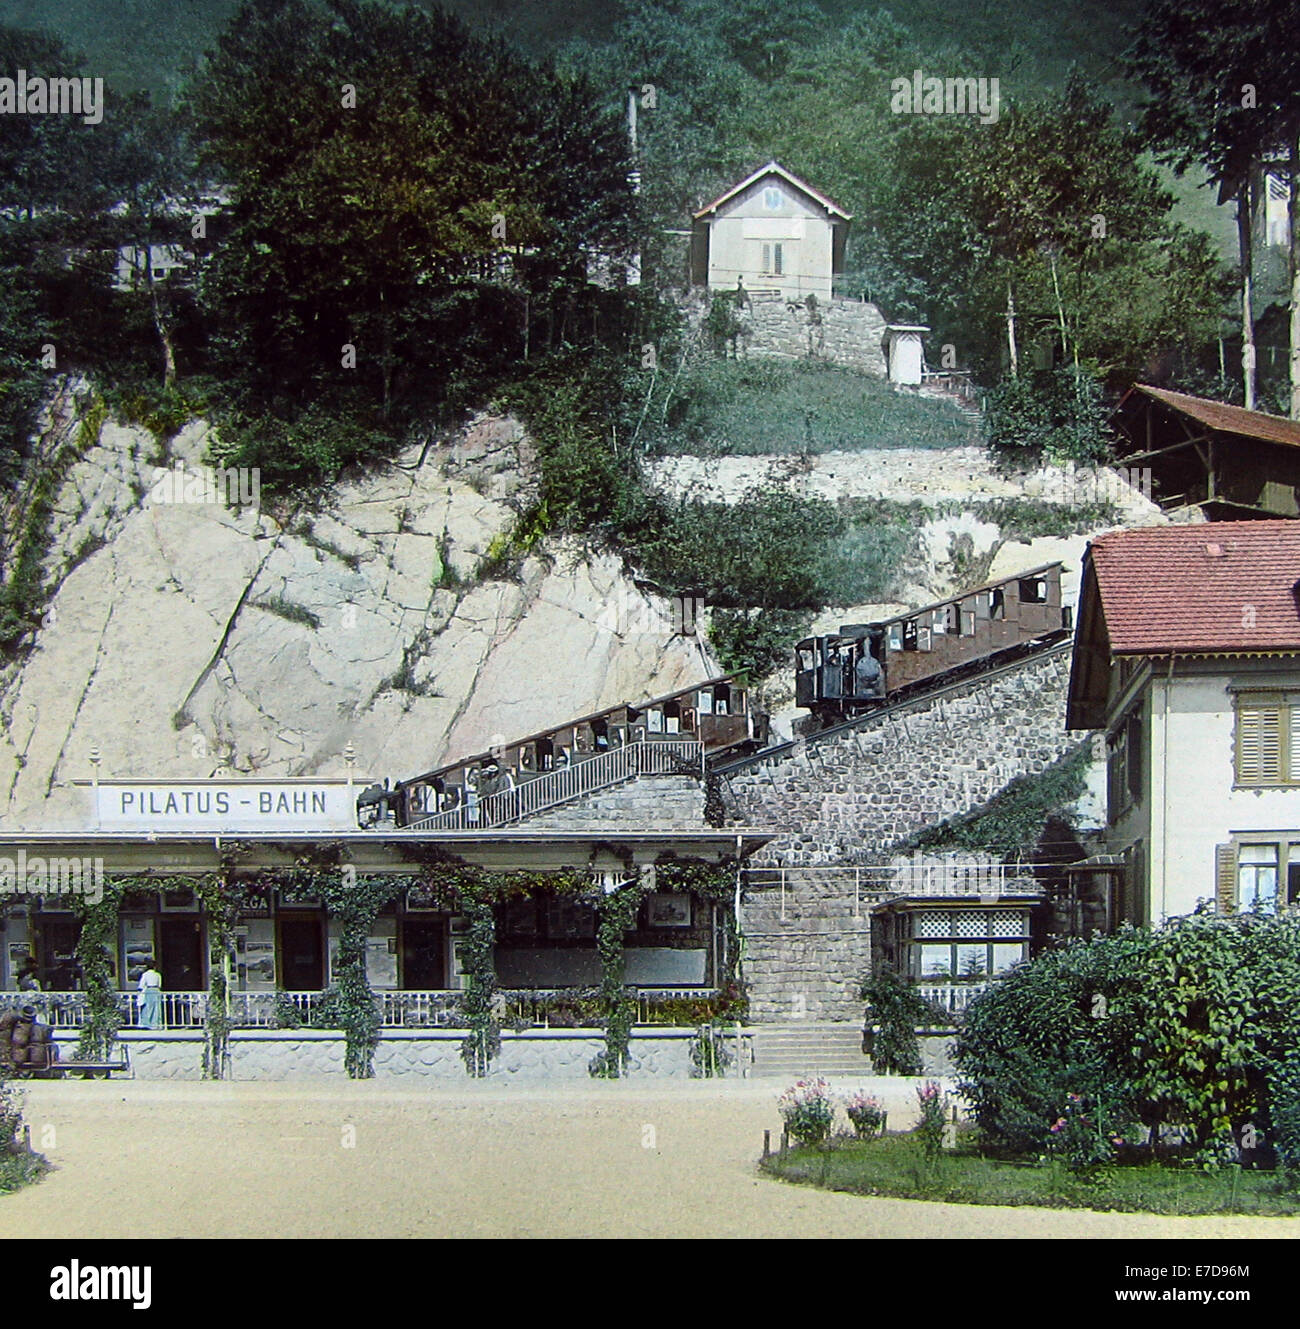 Alpnach Station Pilatus Railway Switzerland Victorian period Stock Photo